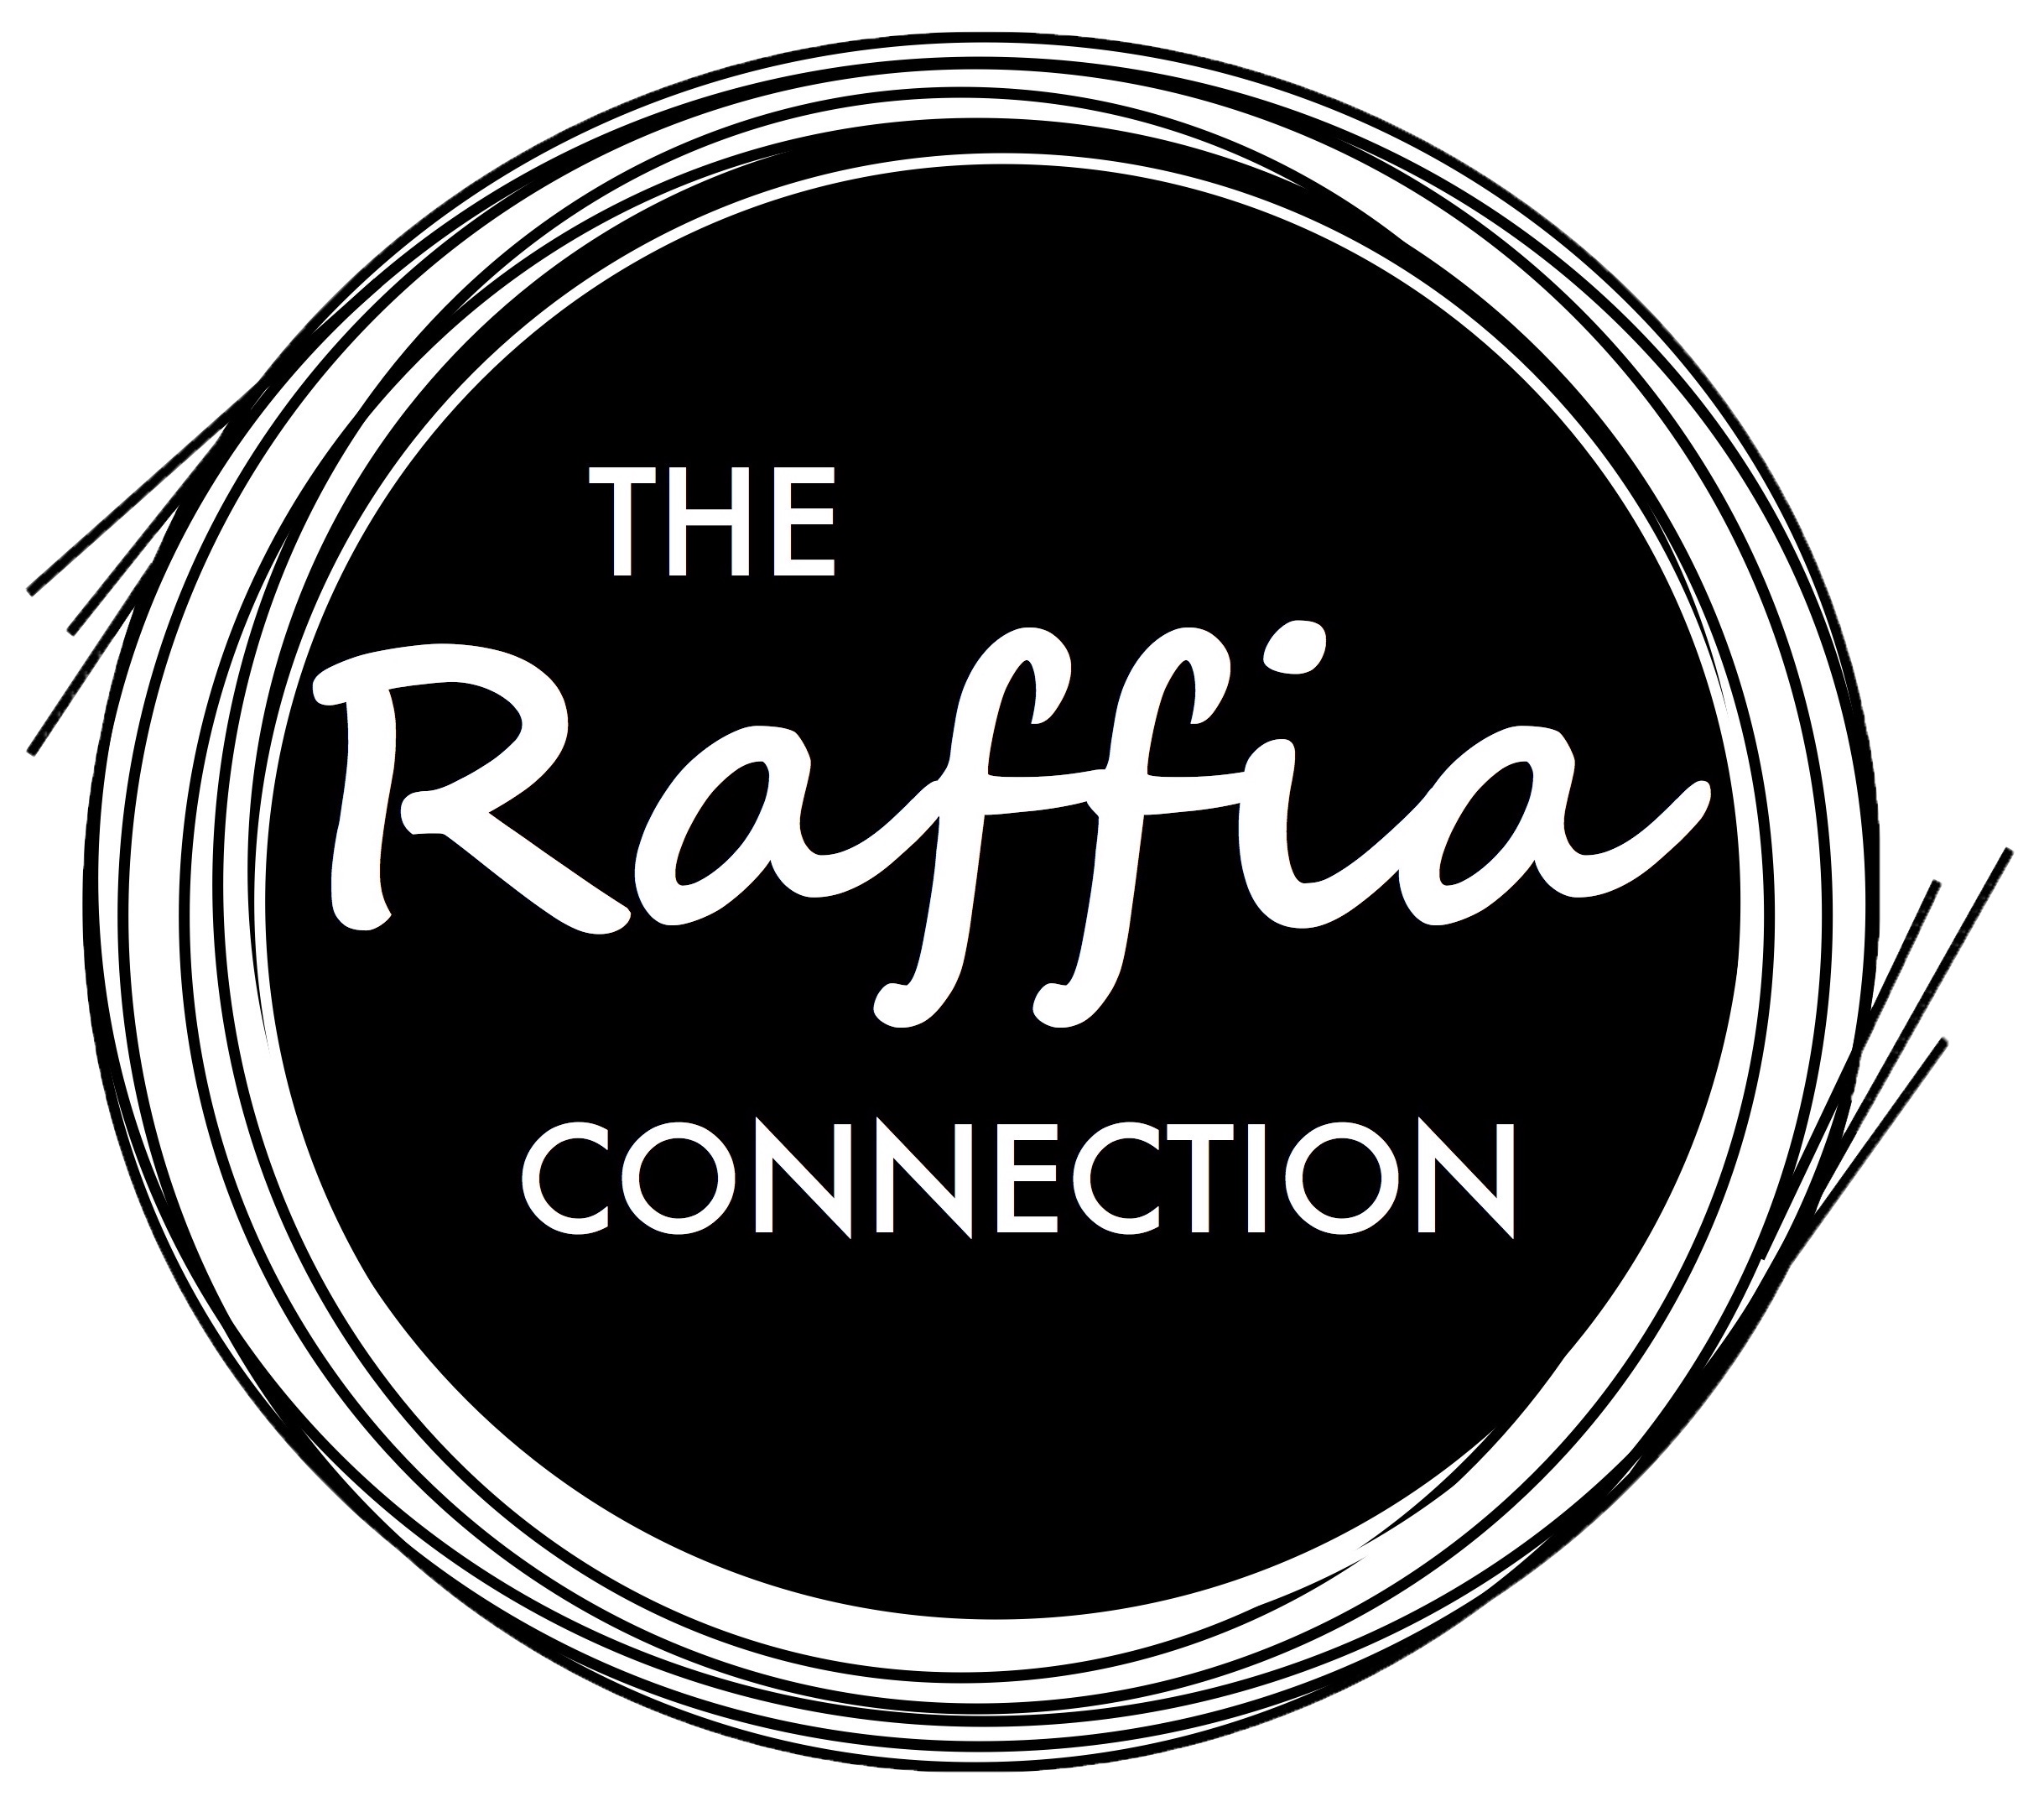 The Raffia Connection